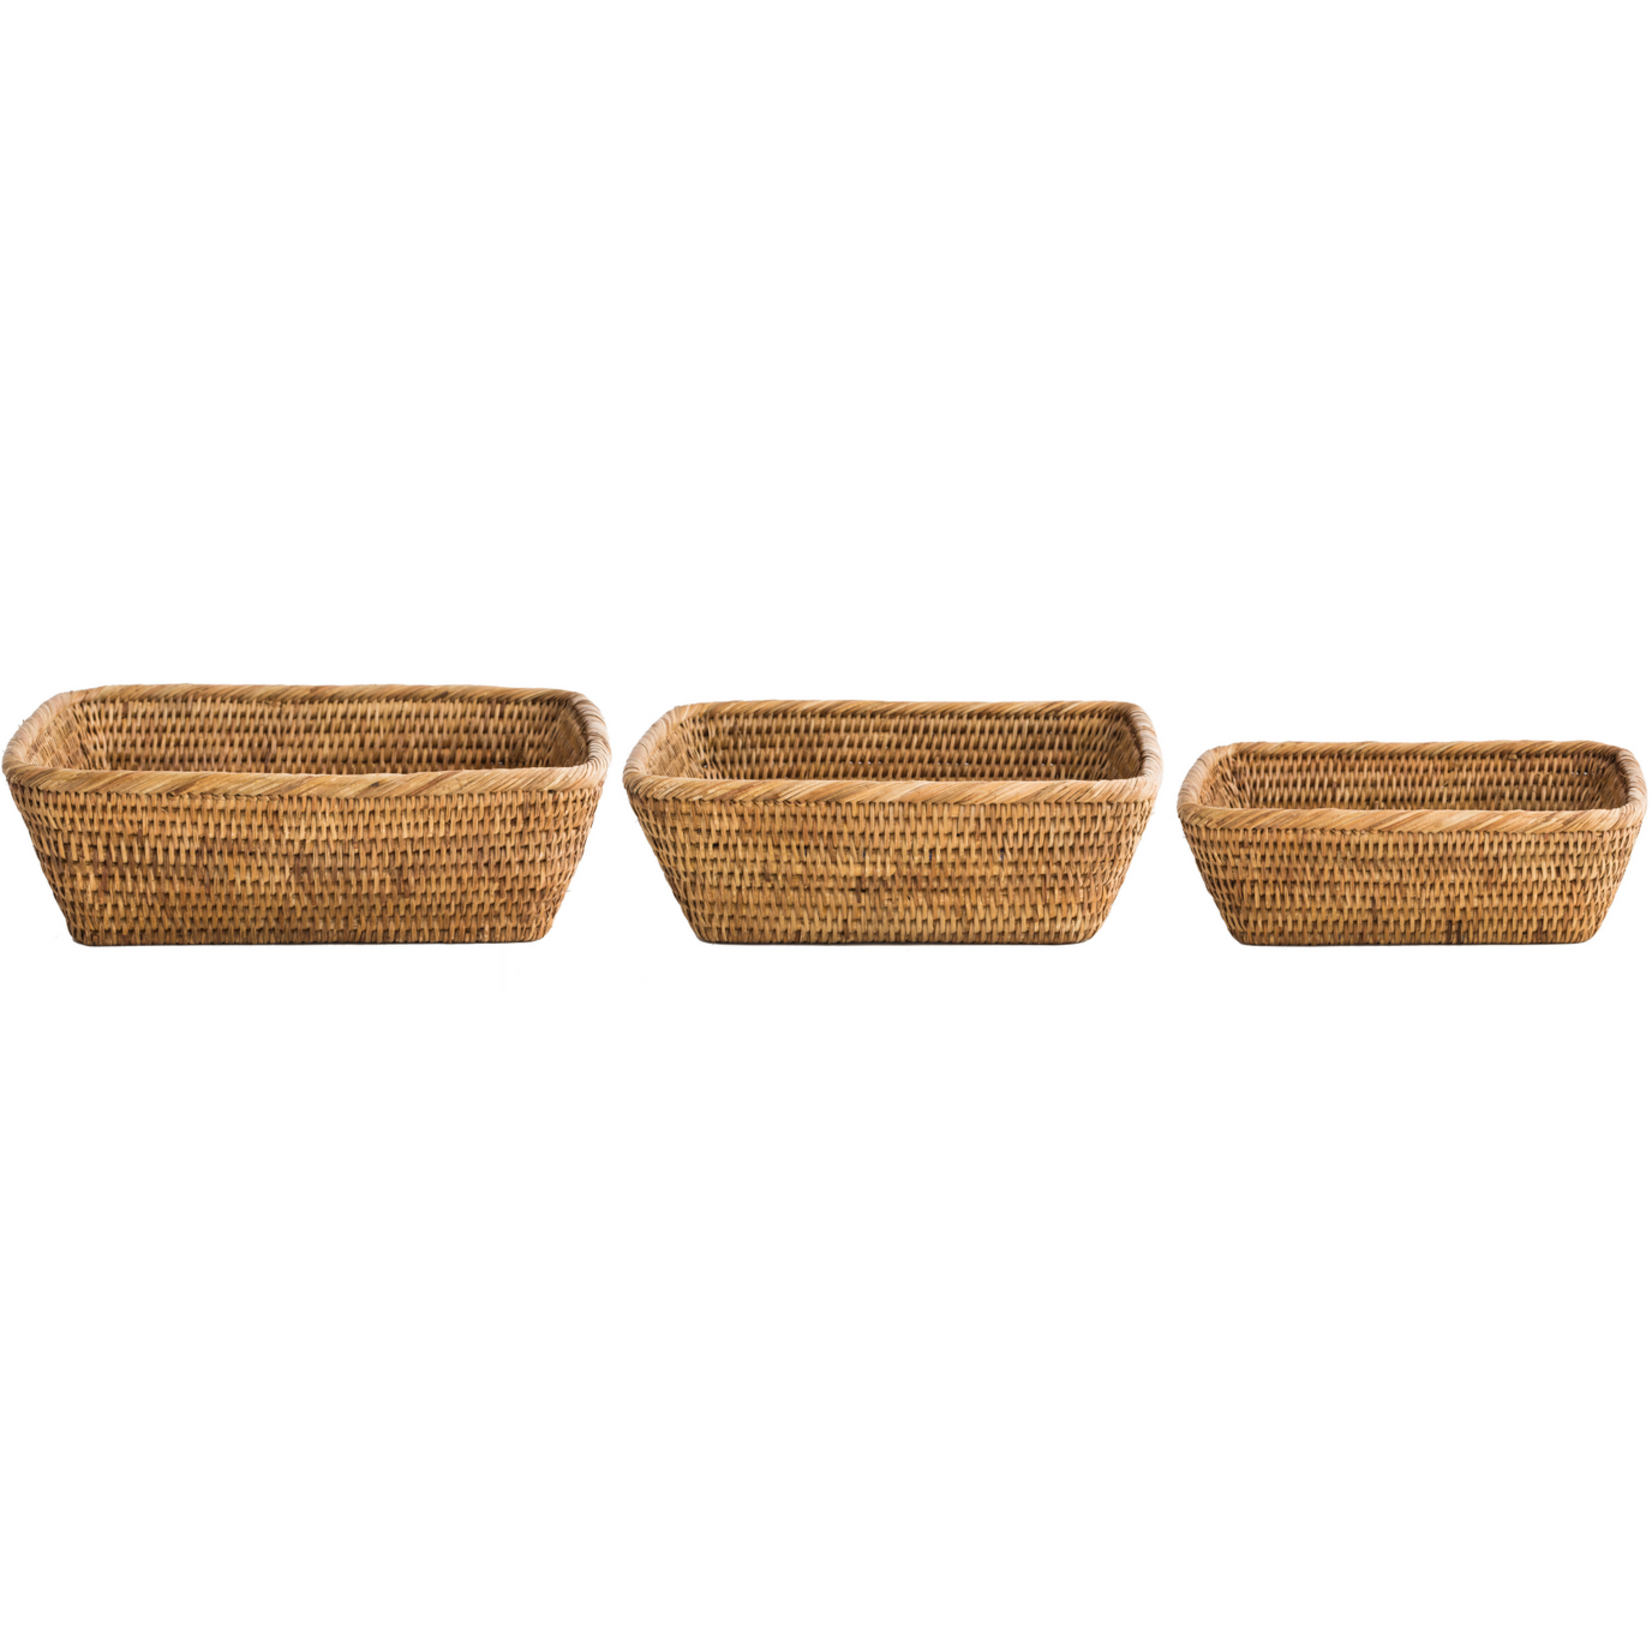 Artifacts Trading Company Rattan Nesting Baskets (Set of 3)